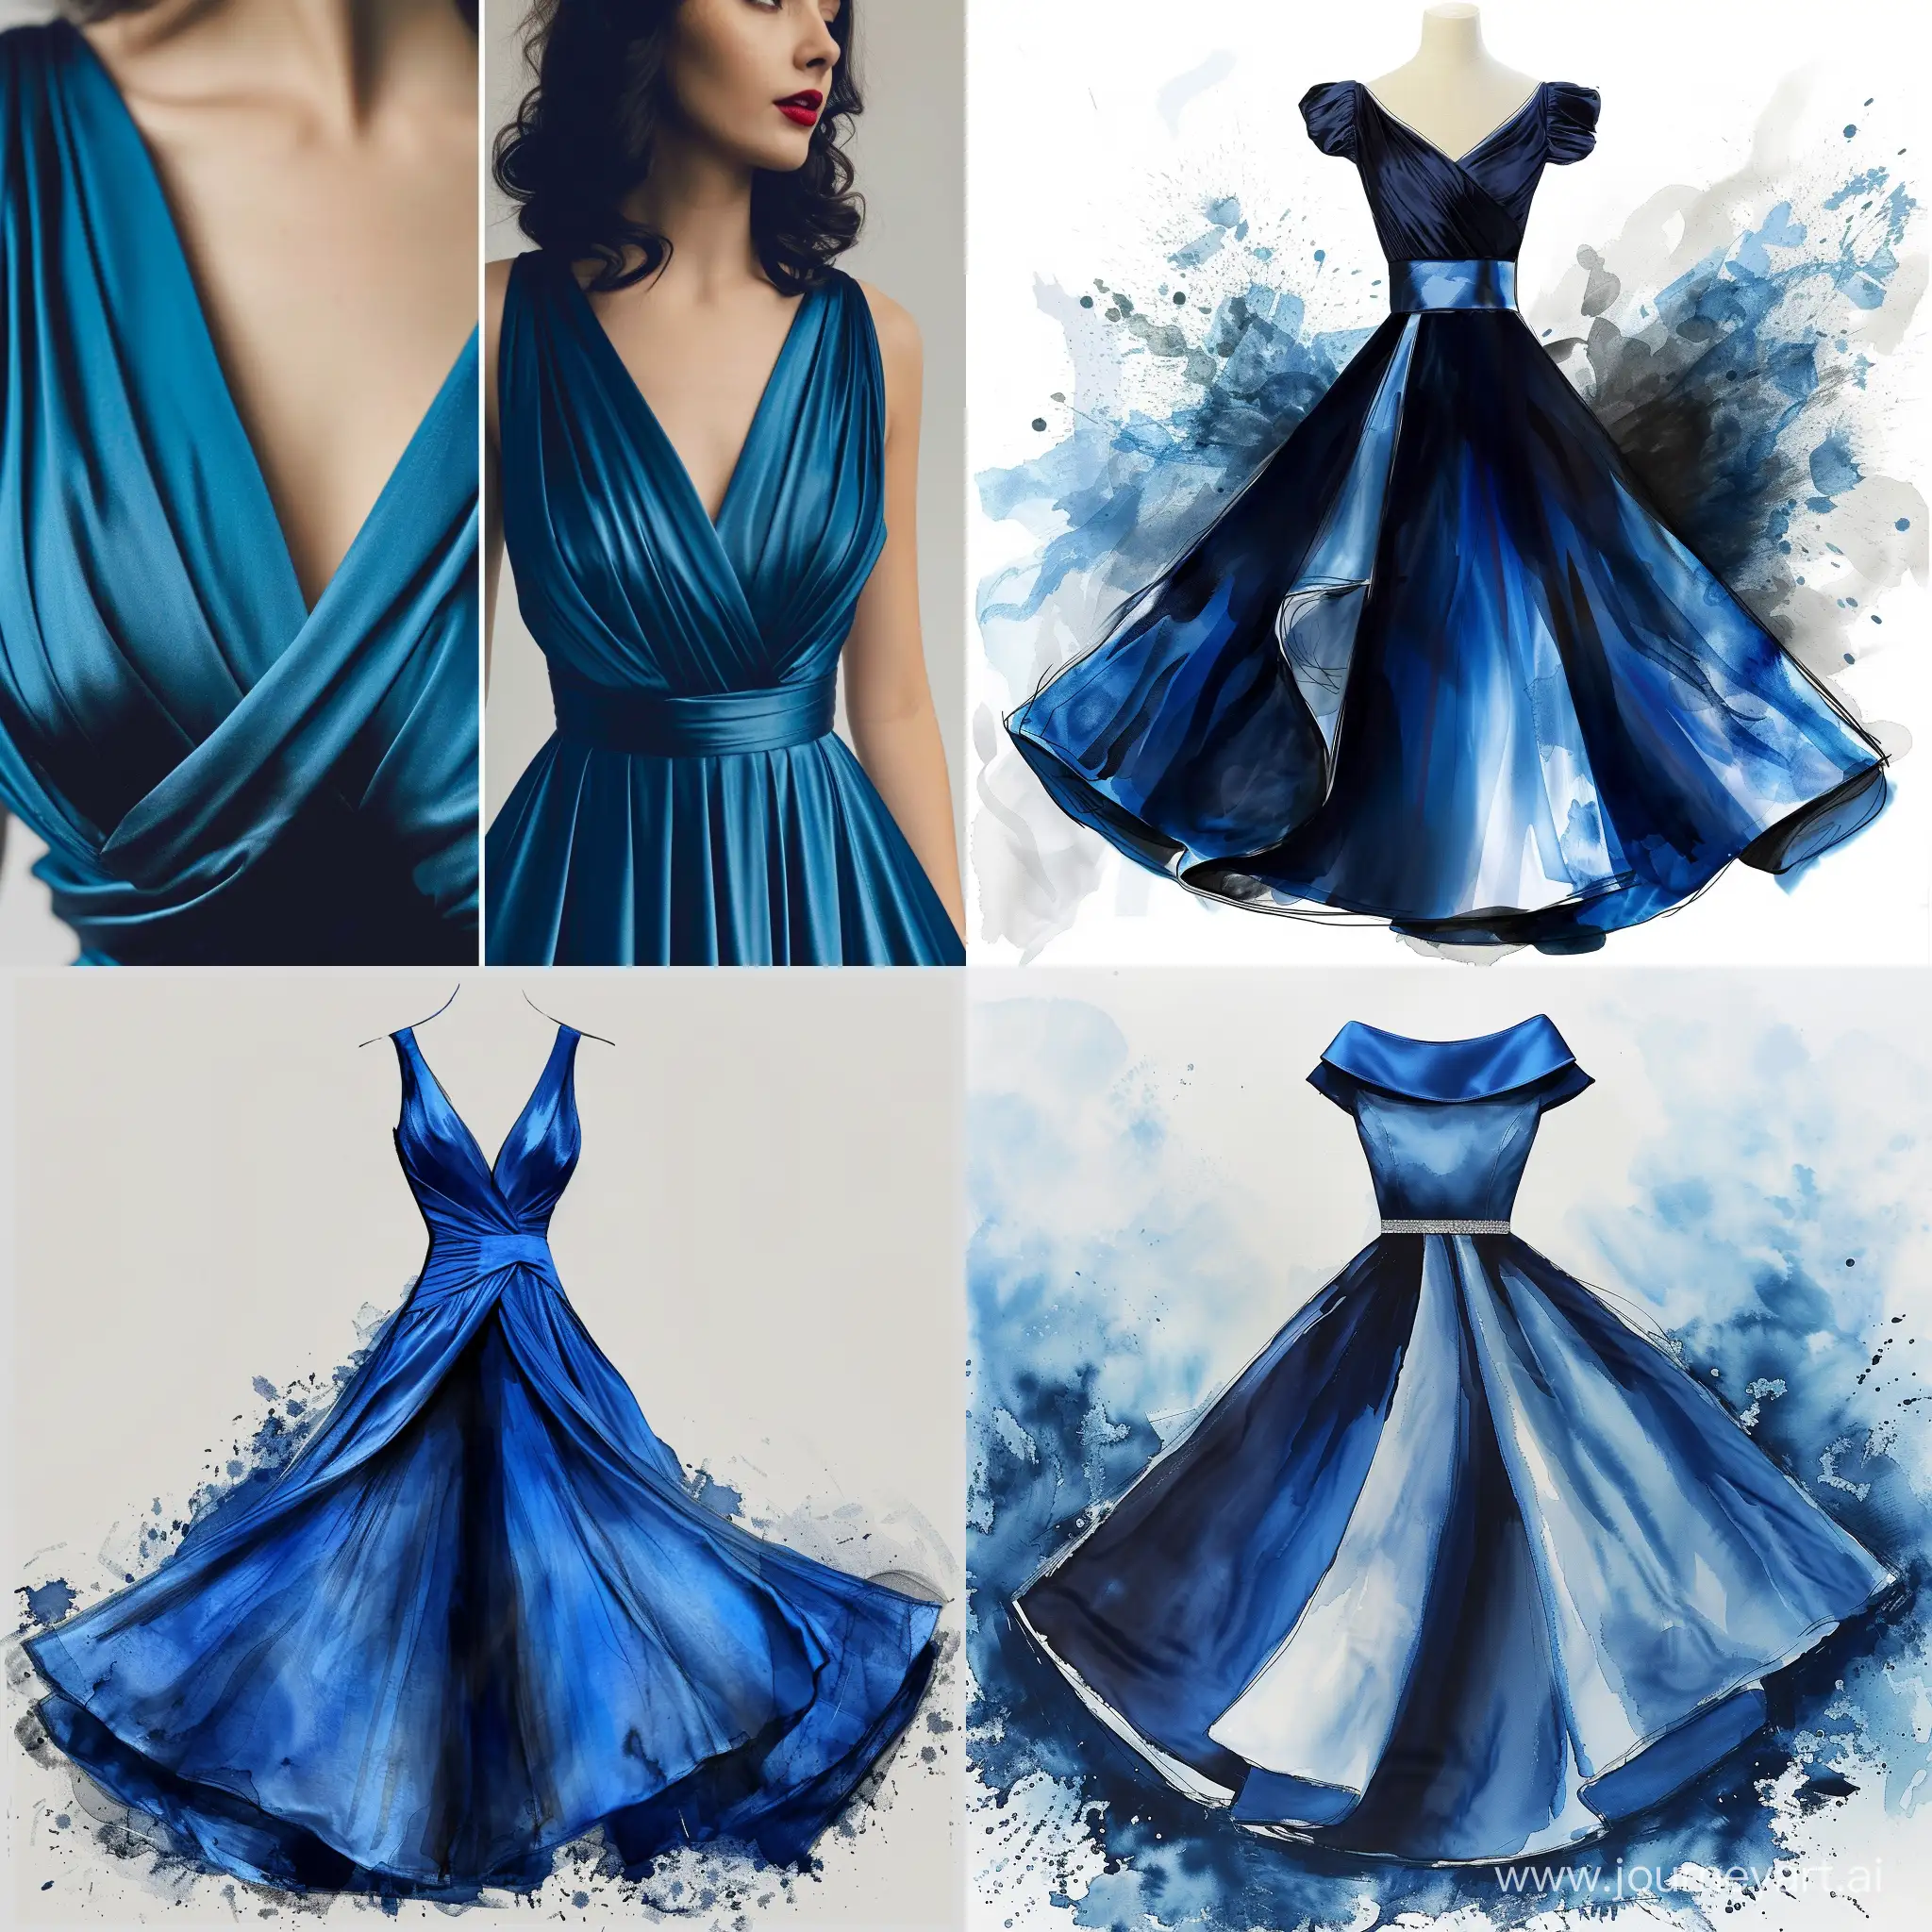 Elegant-Ocean-Blue-Satin-Dress-Fashion-Design